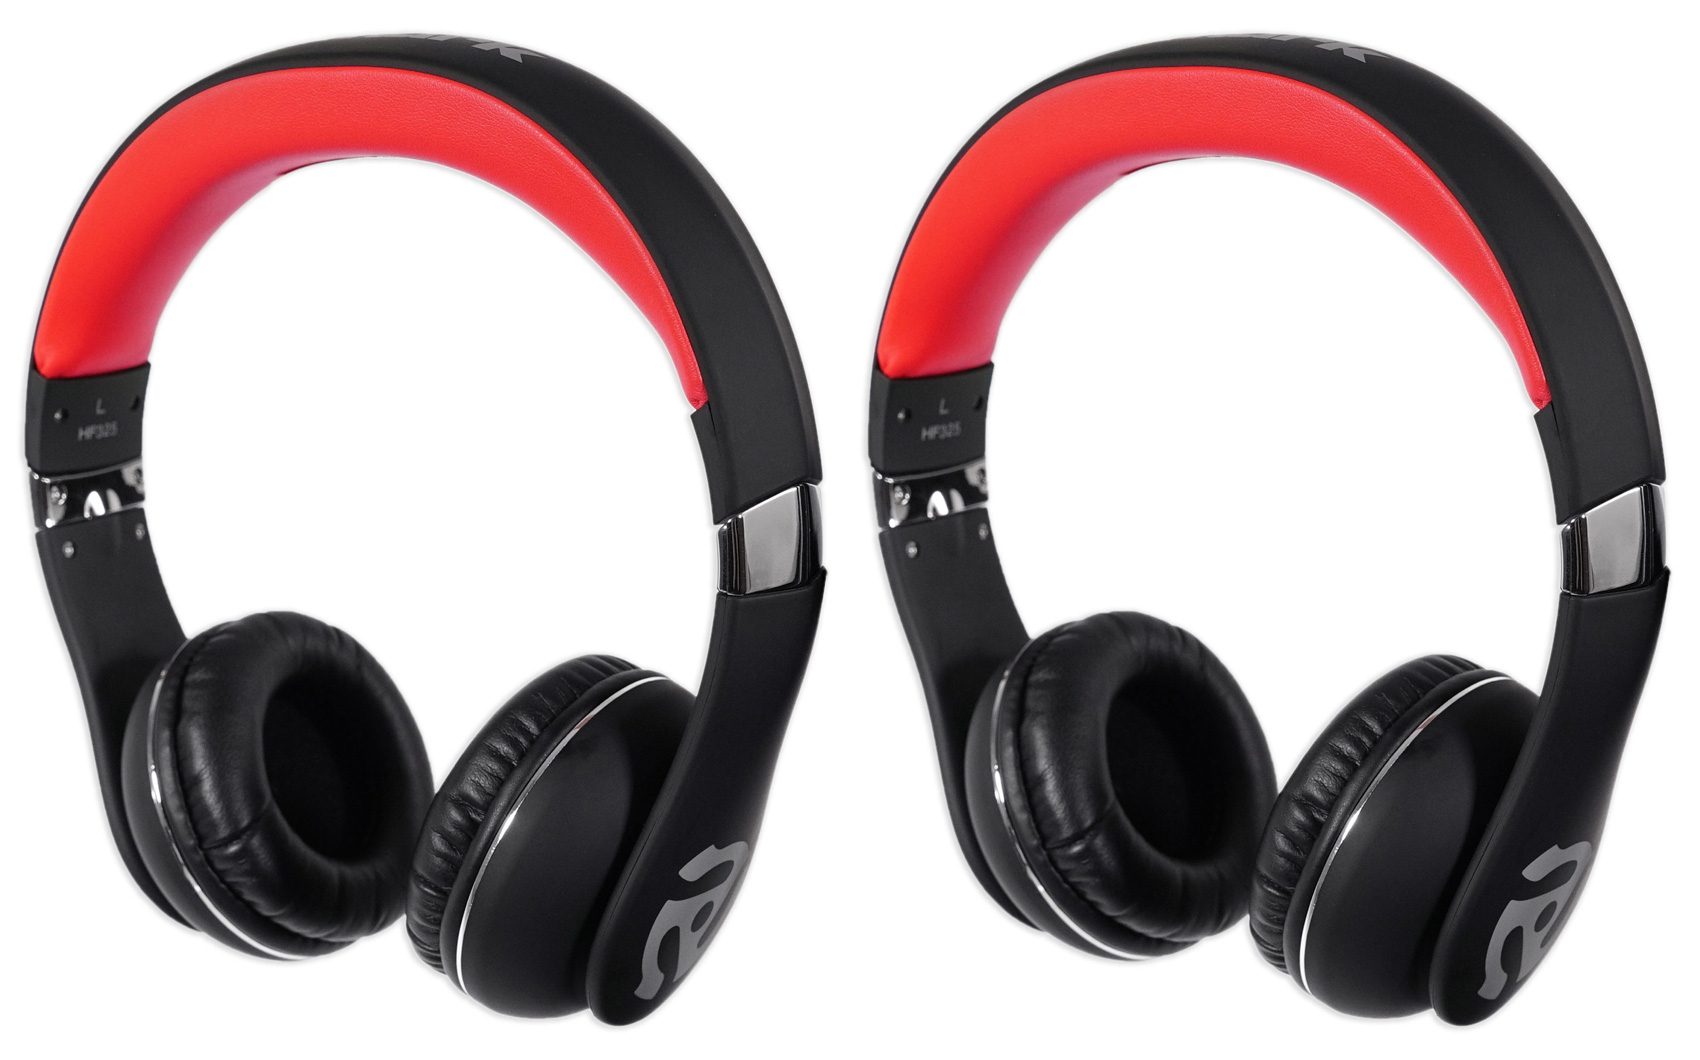 (2) Numark HF325 Professional On-Ear Portable DJ Headphones w/ Rotating Earcup